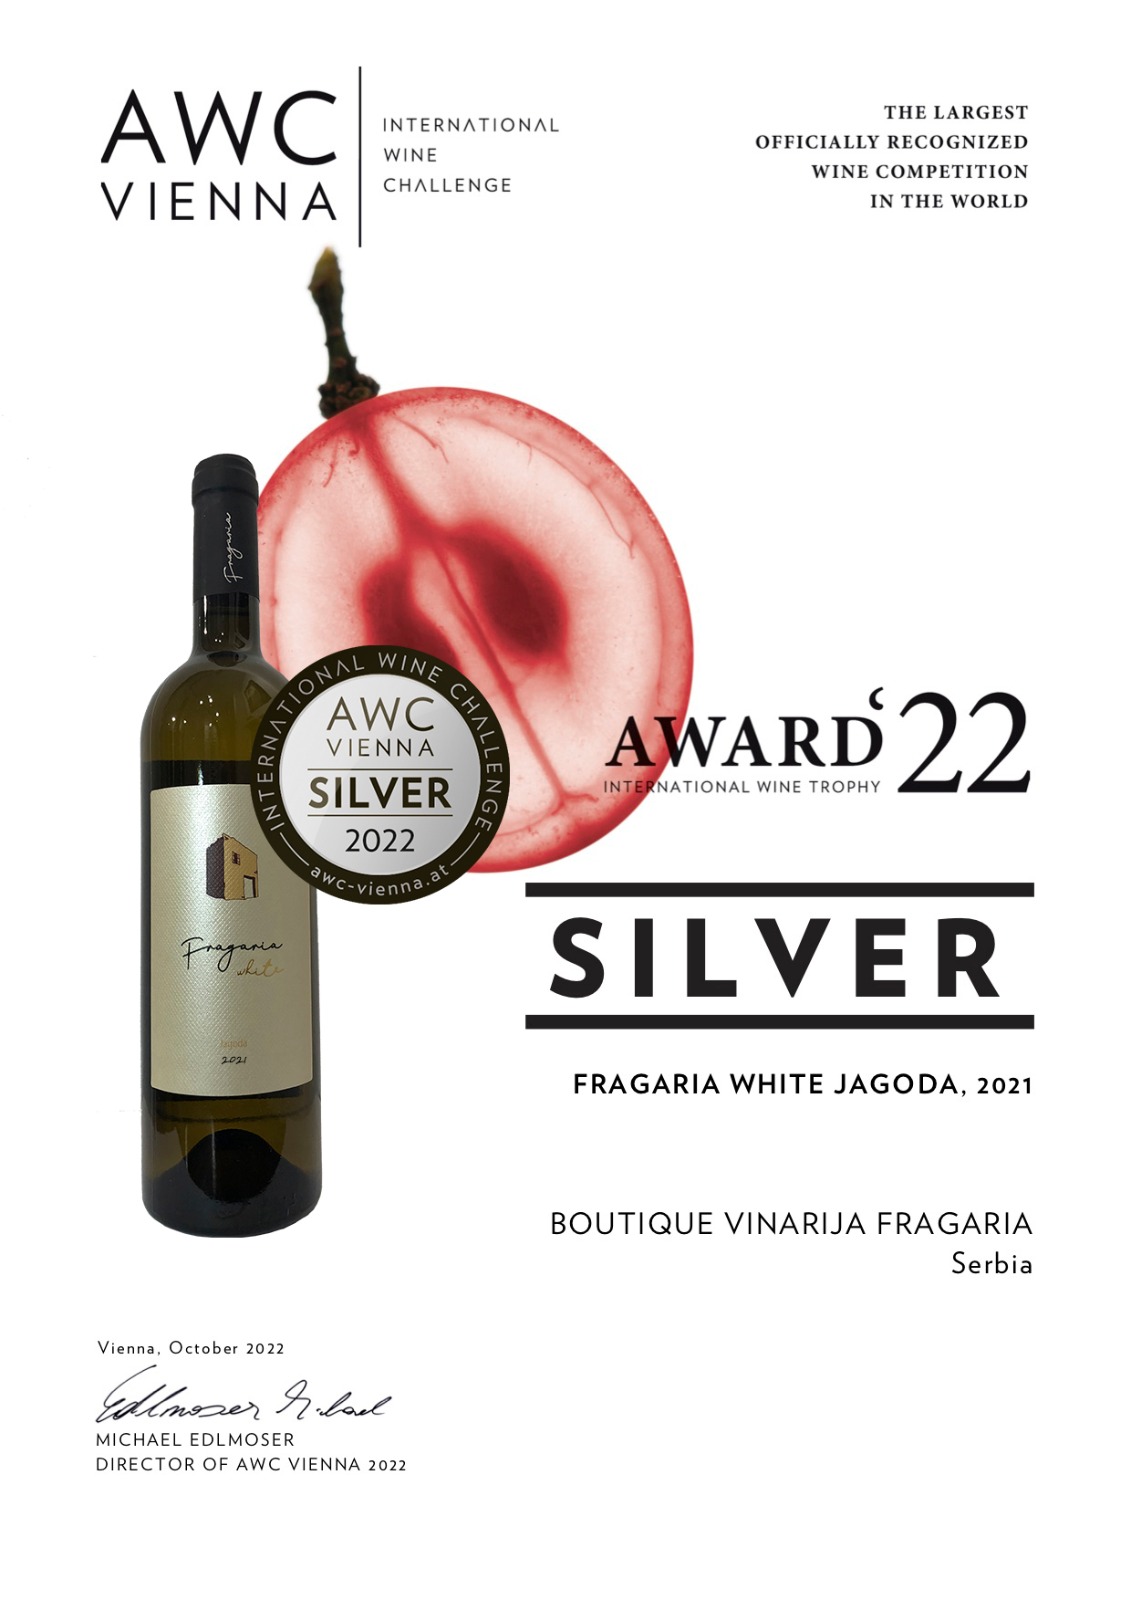 fragaria-white-jagoda-silver-awc-vienna-2022.jpeg